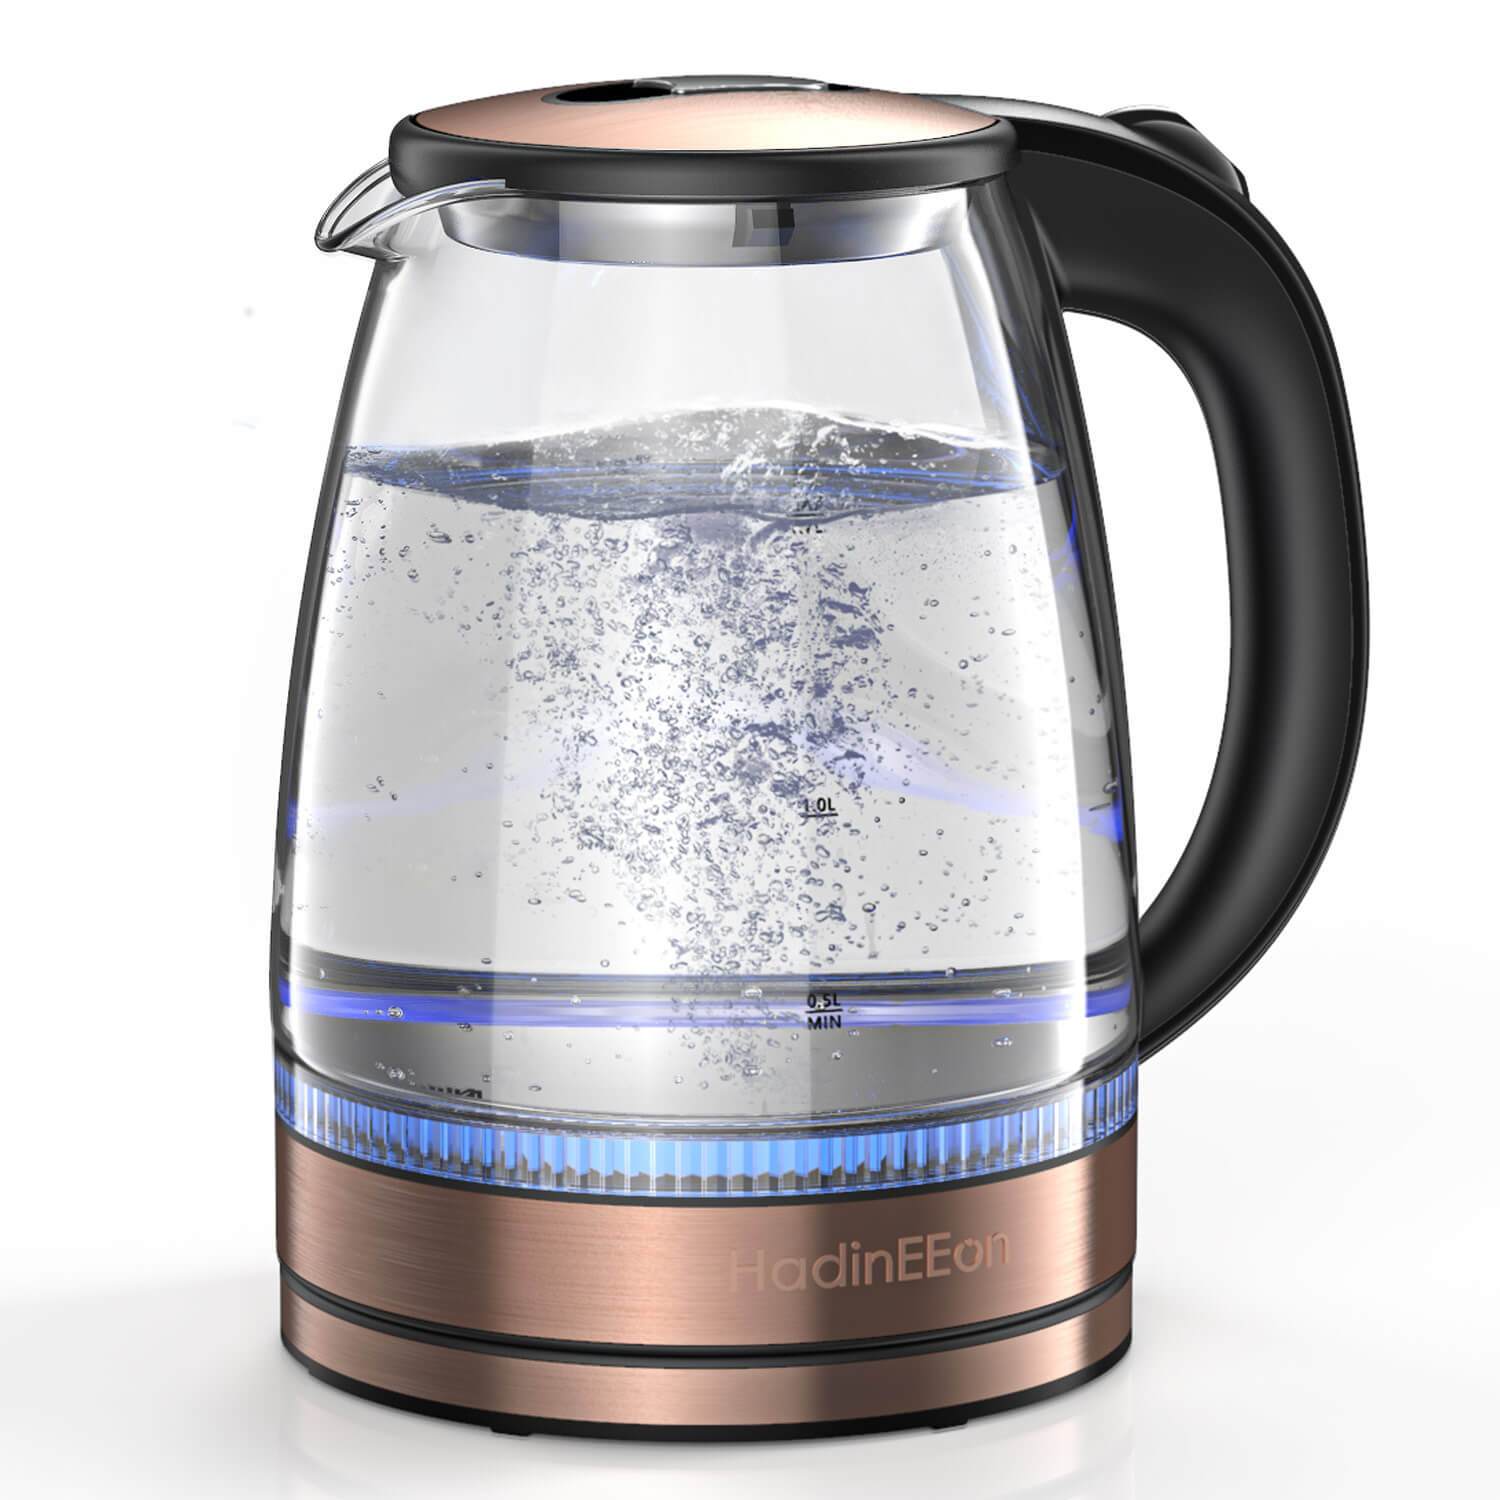 Best glass electric kettle glass tea kettle-wholesale – HadinEEon